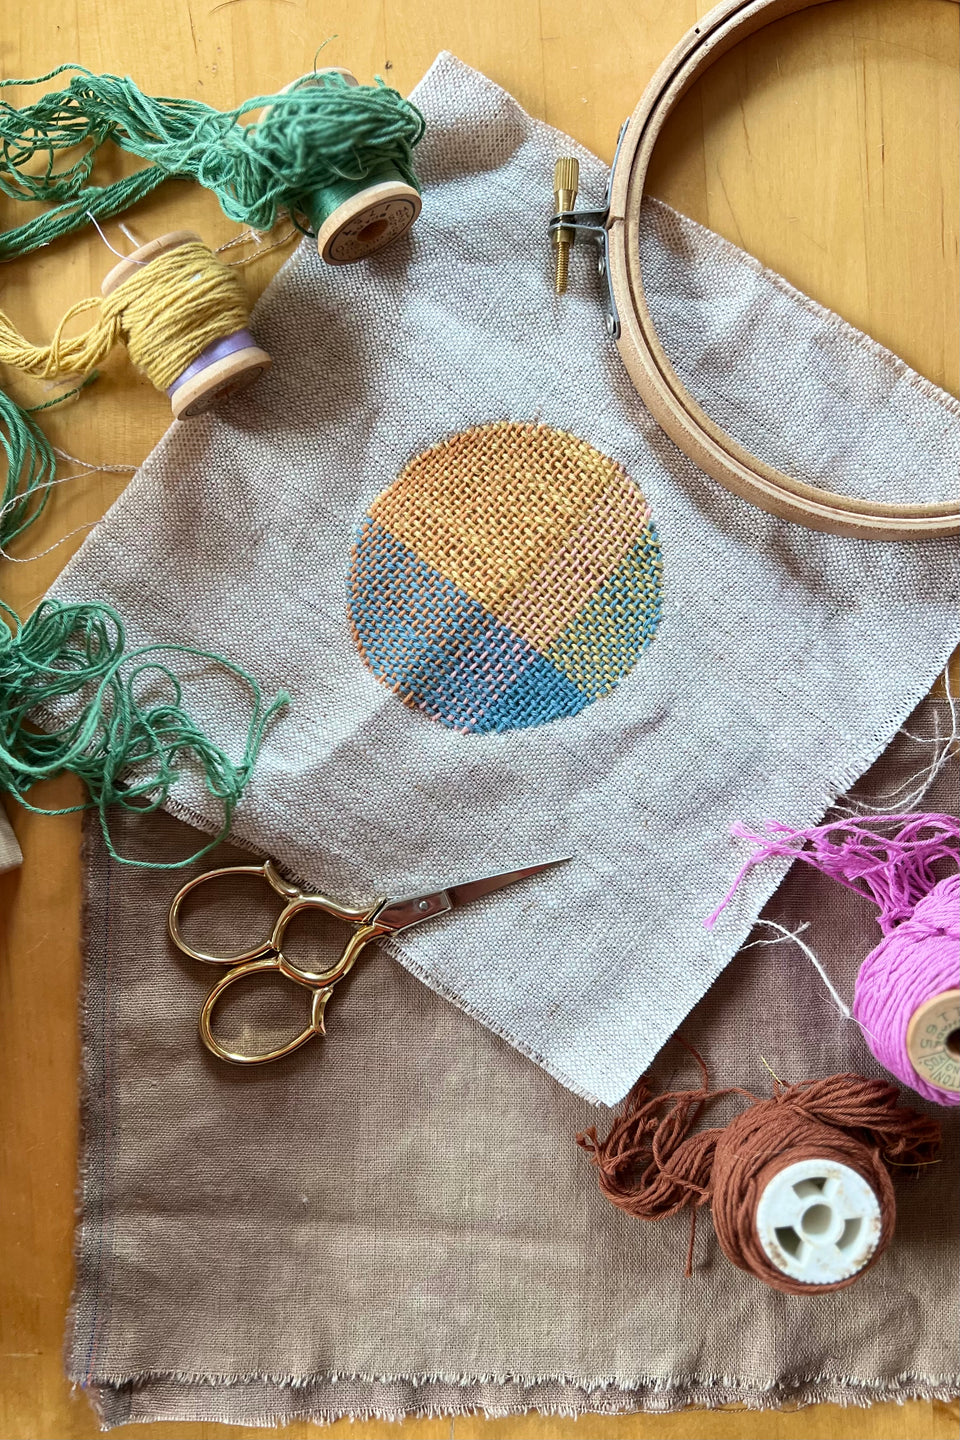 Community Craft Night: Needle Weaving Embroidery